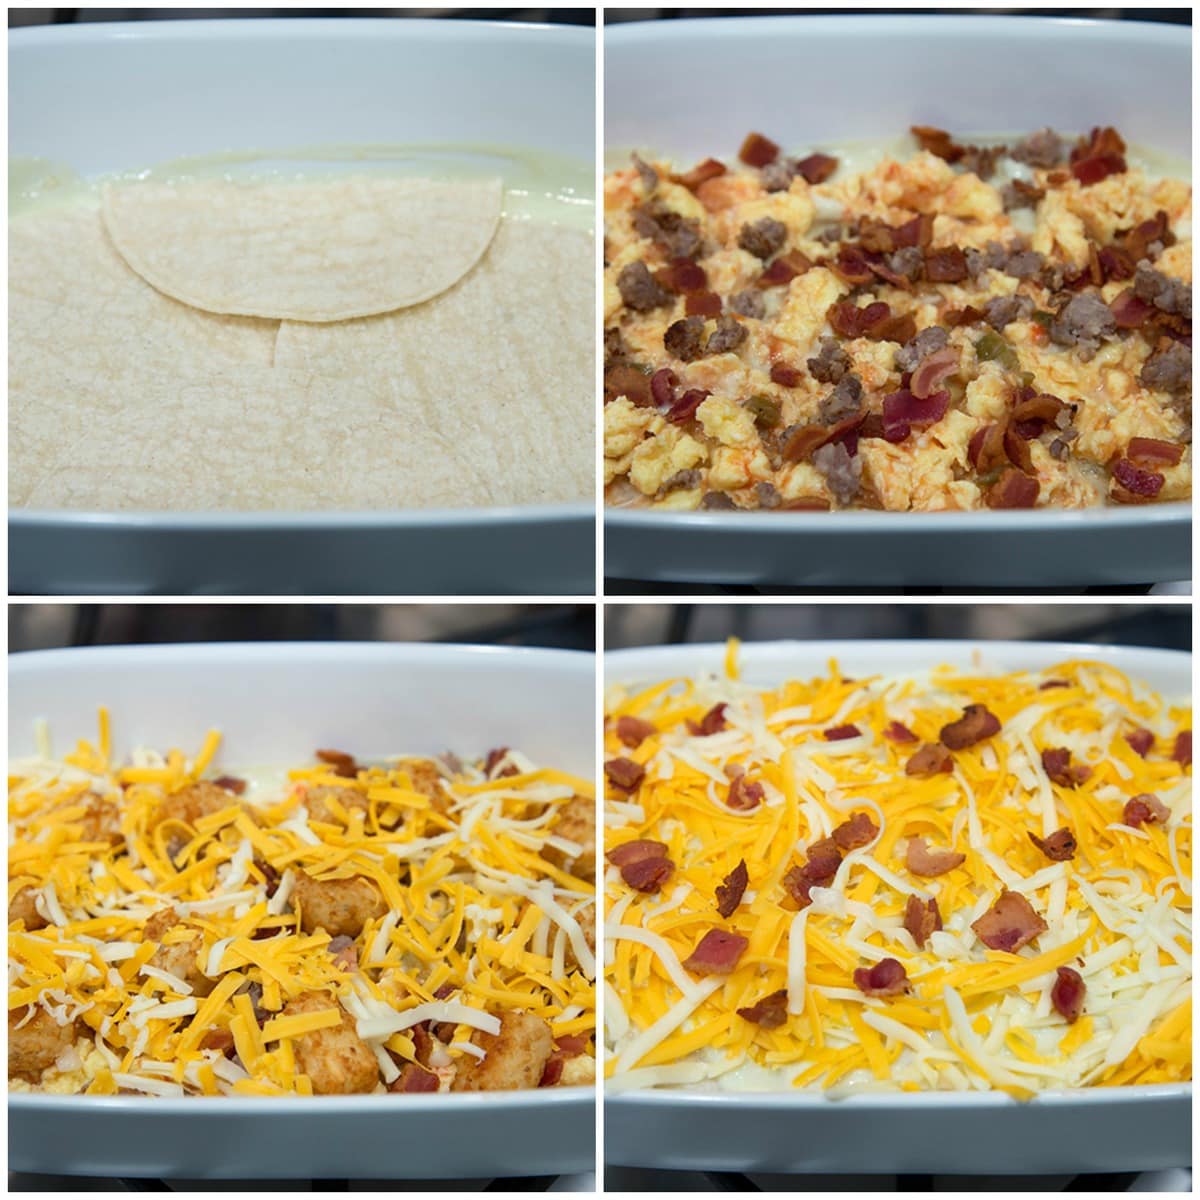 Process pics for layering breakfast enchilada casserole